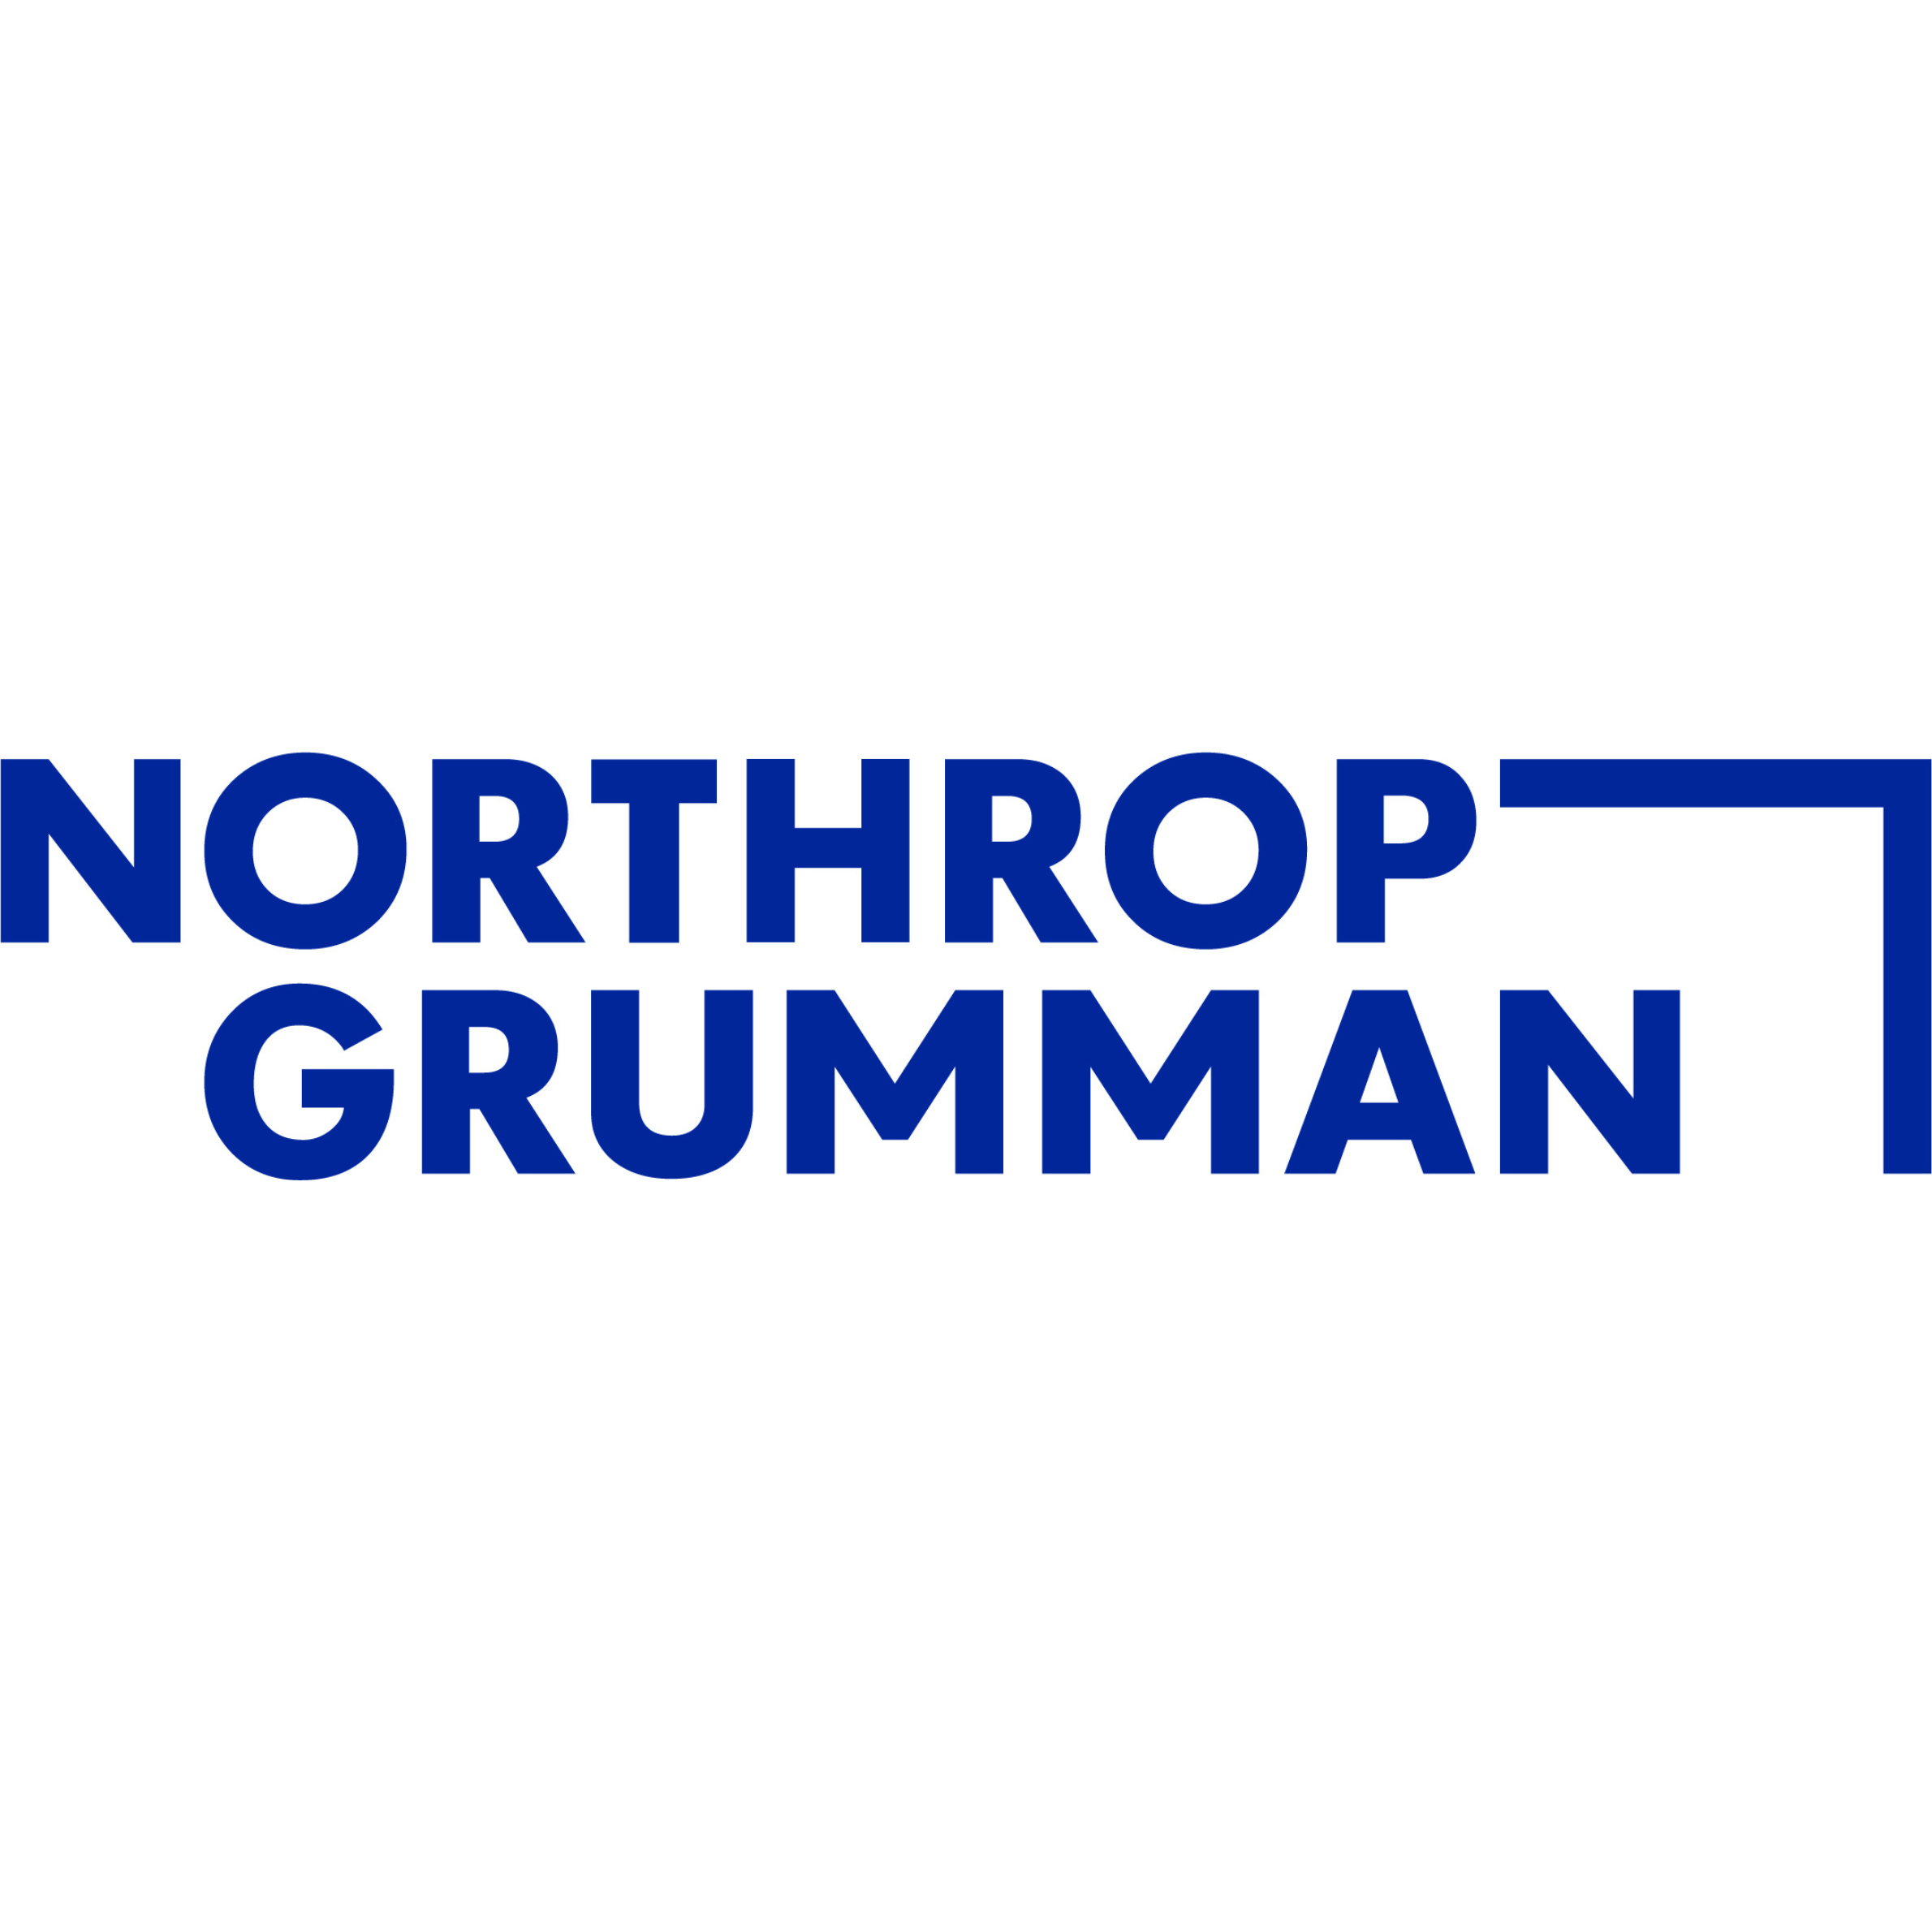 Northop Grumman